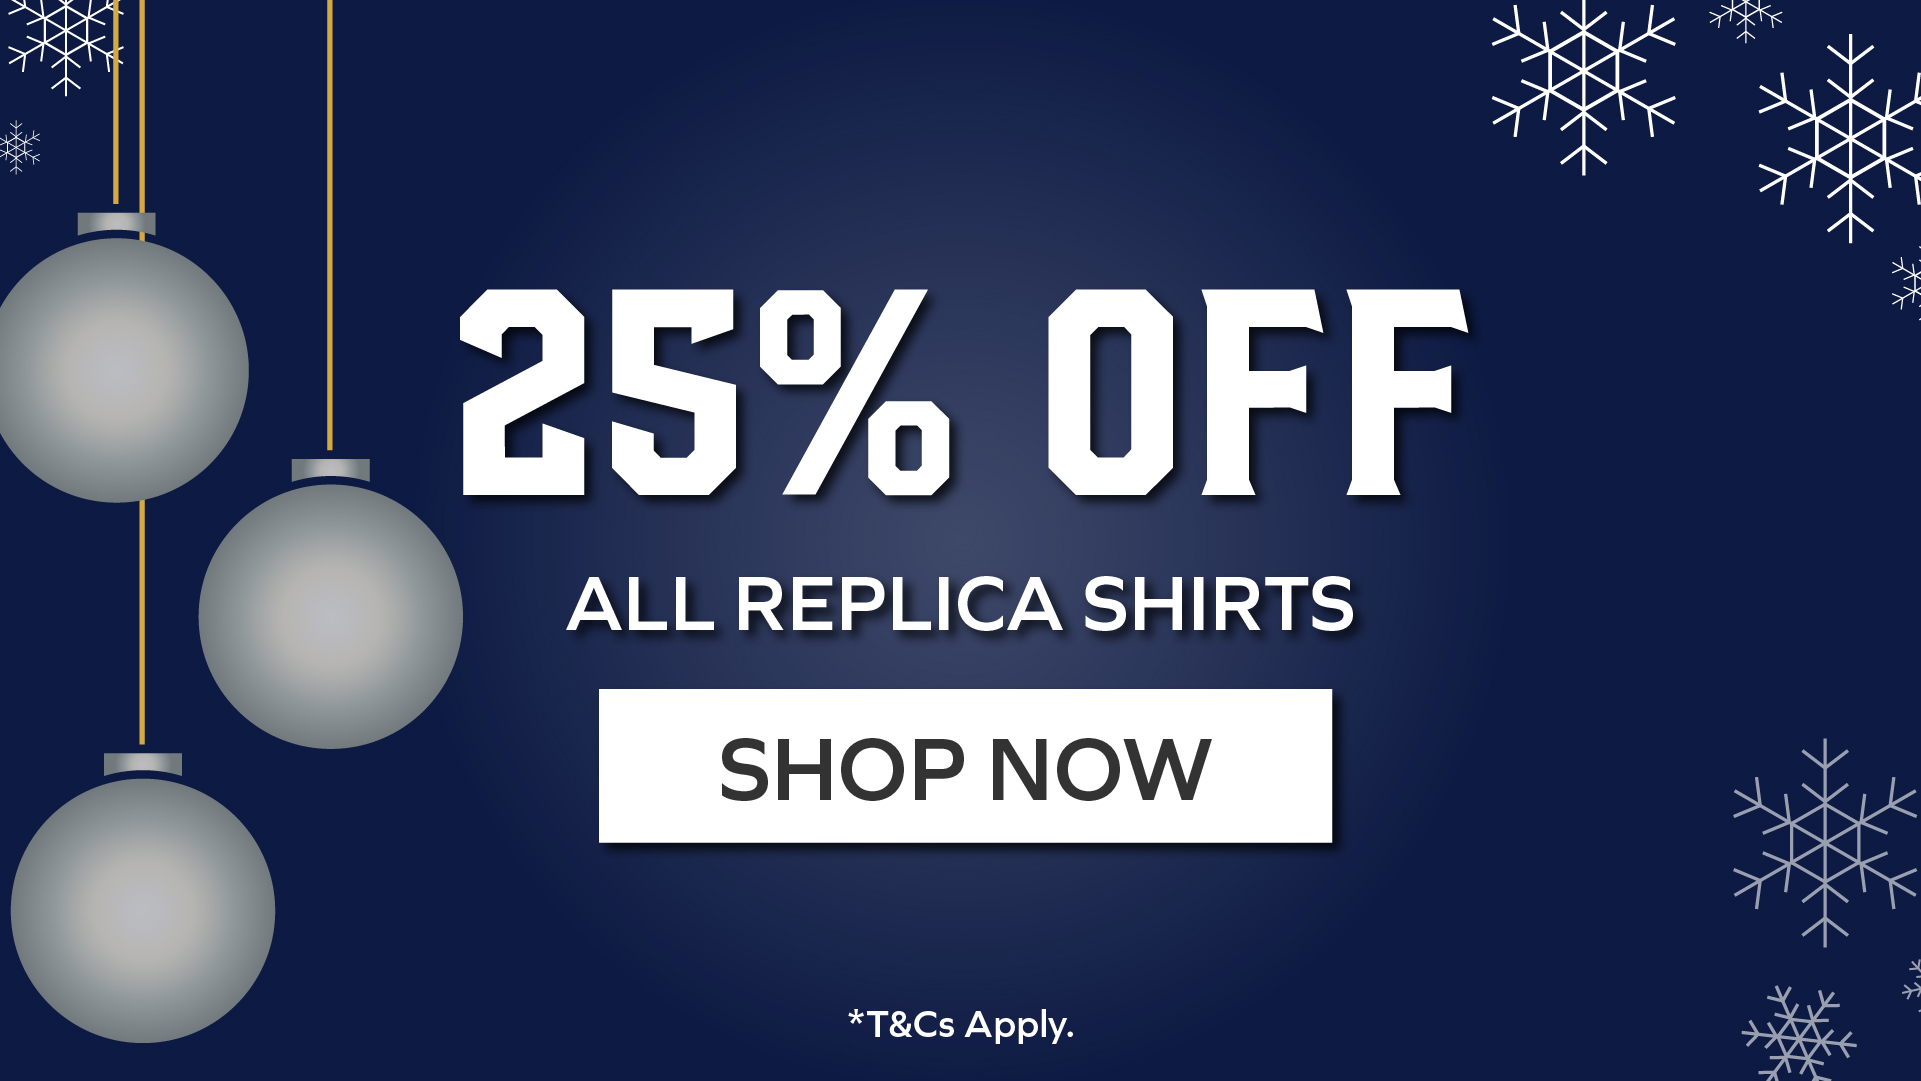 25% off replica shirts!